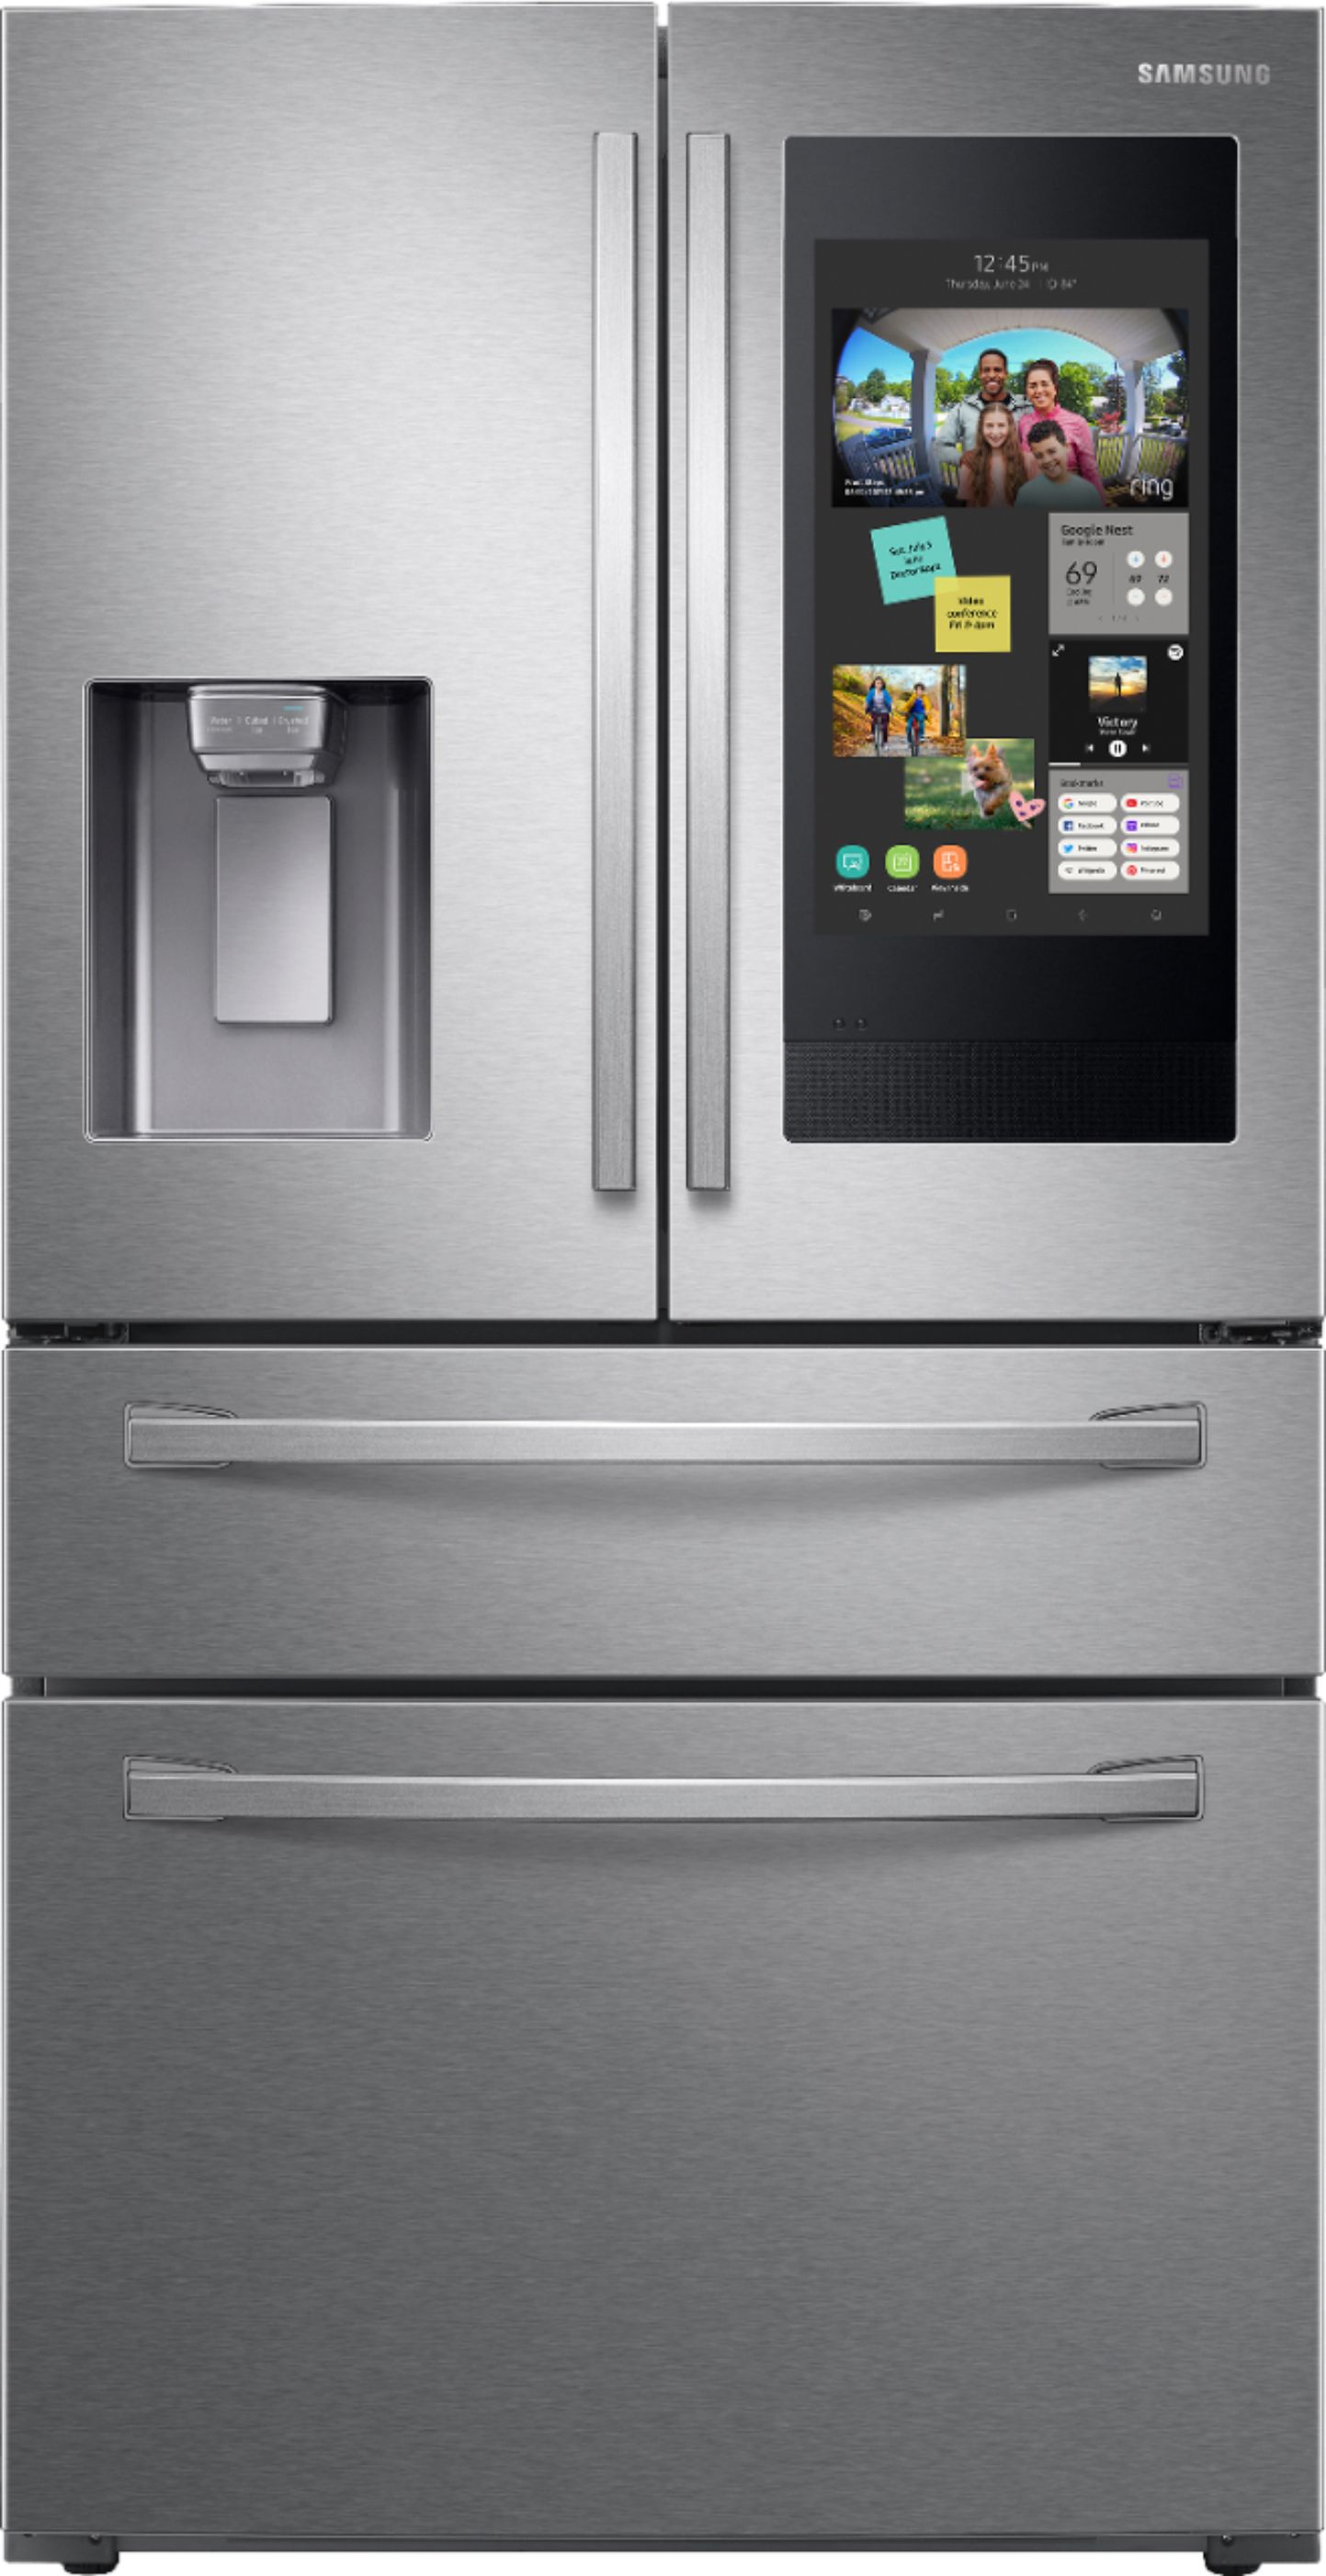 Samsung Family Hub 22 2 Cu Ft 4 Door French Door Counter Depth Fingerprint Resistant Refrigerator Stainless Steel Rf22r7551sr Best Buy